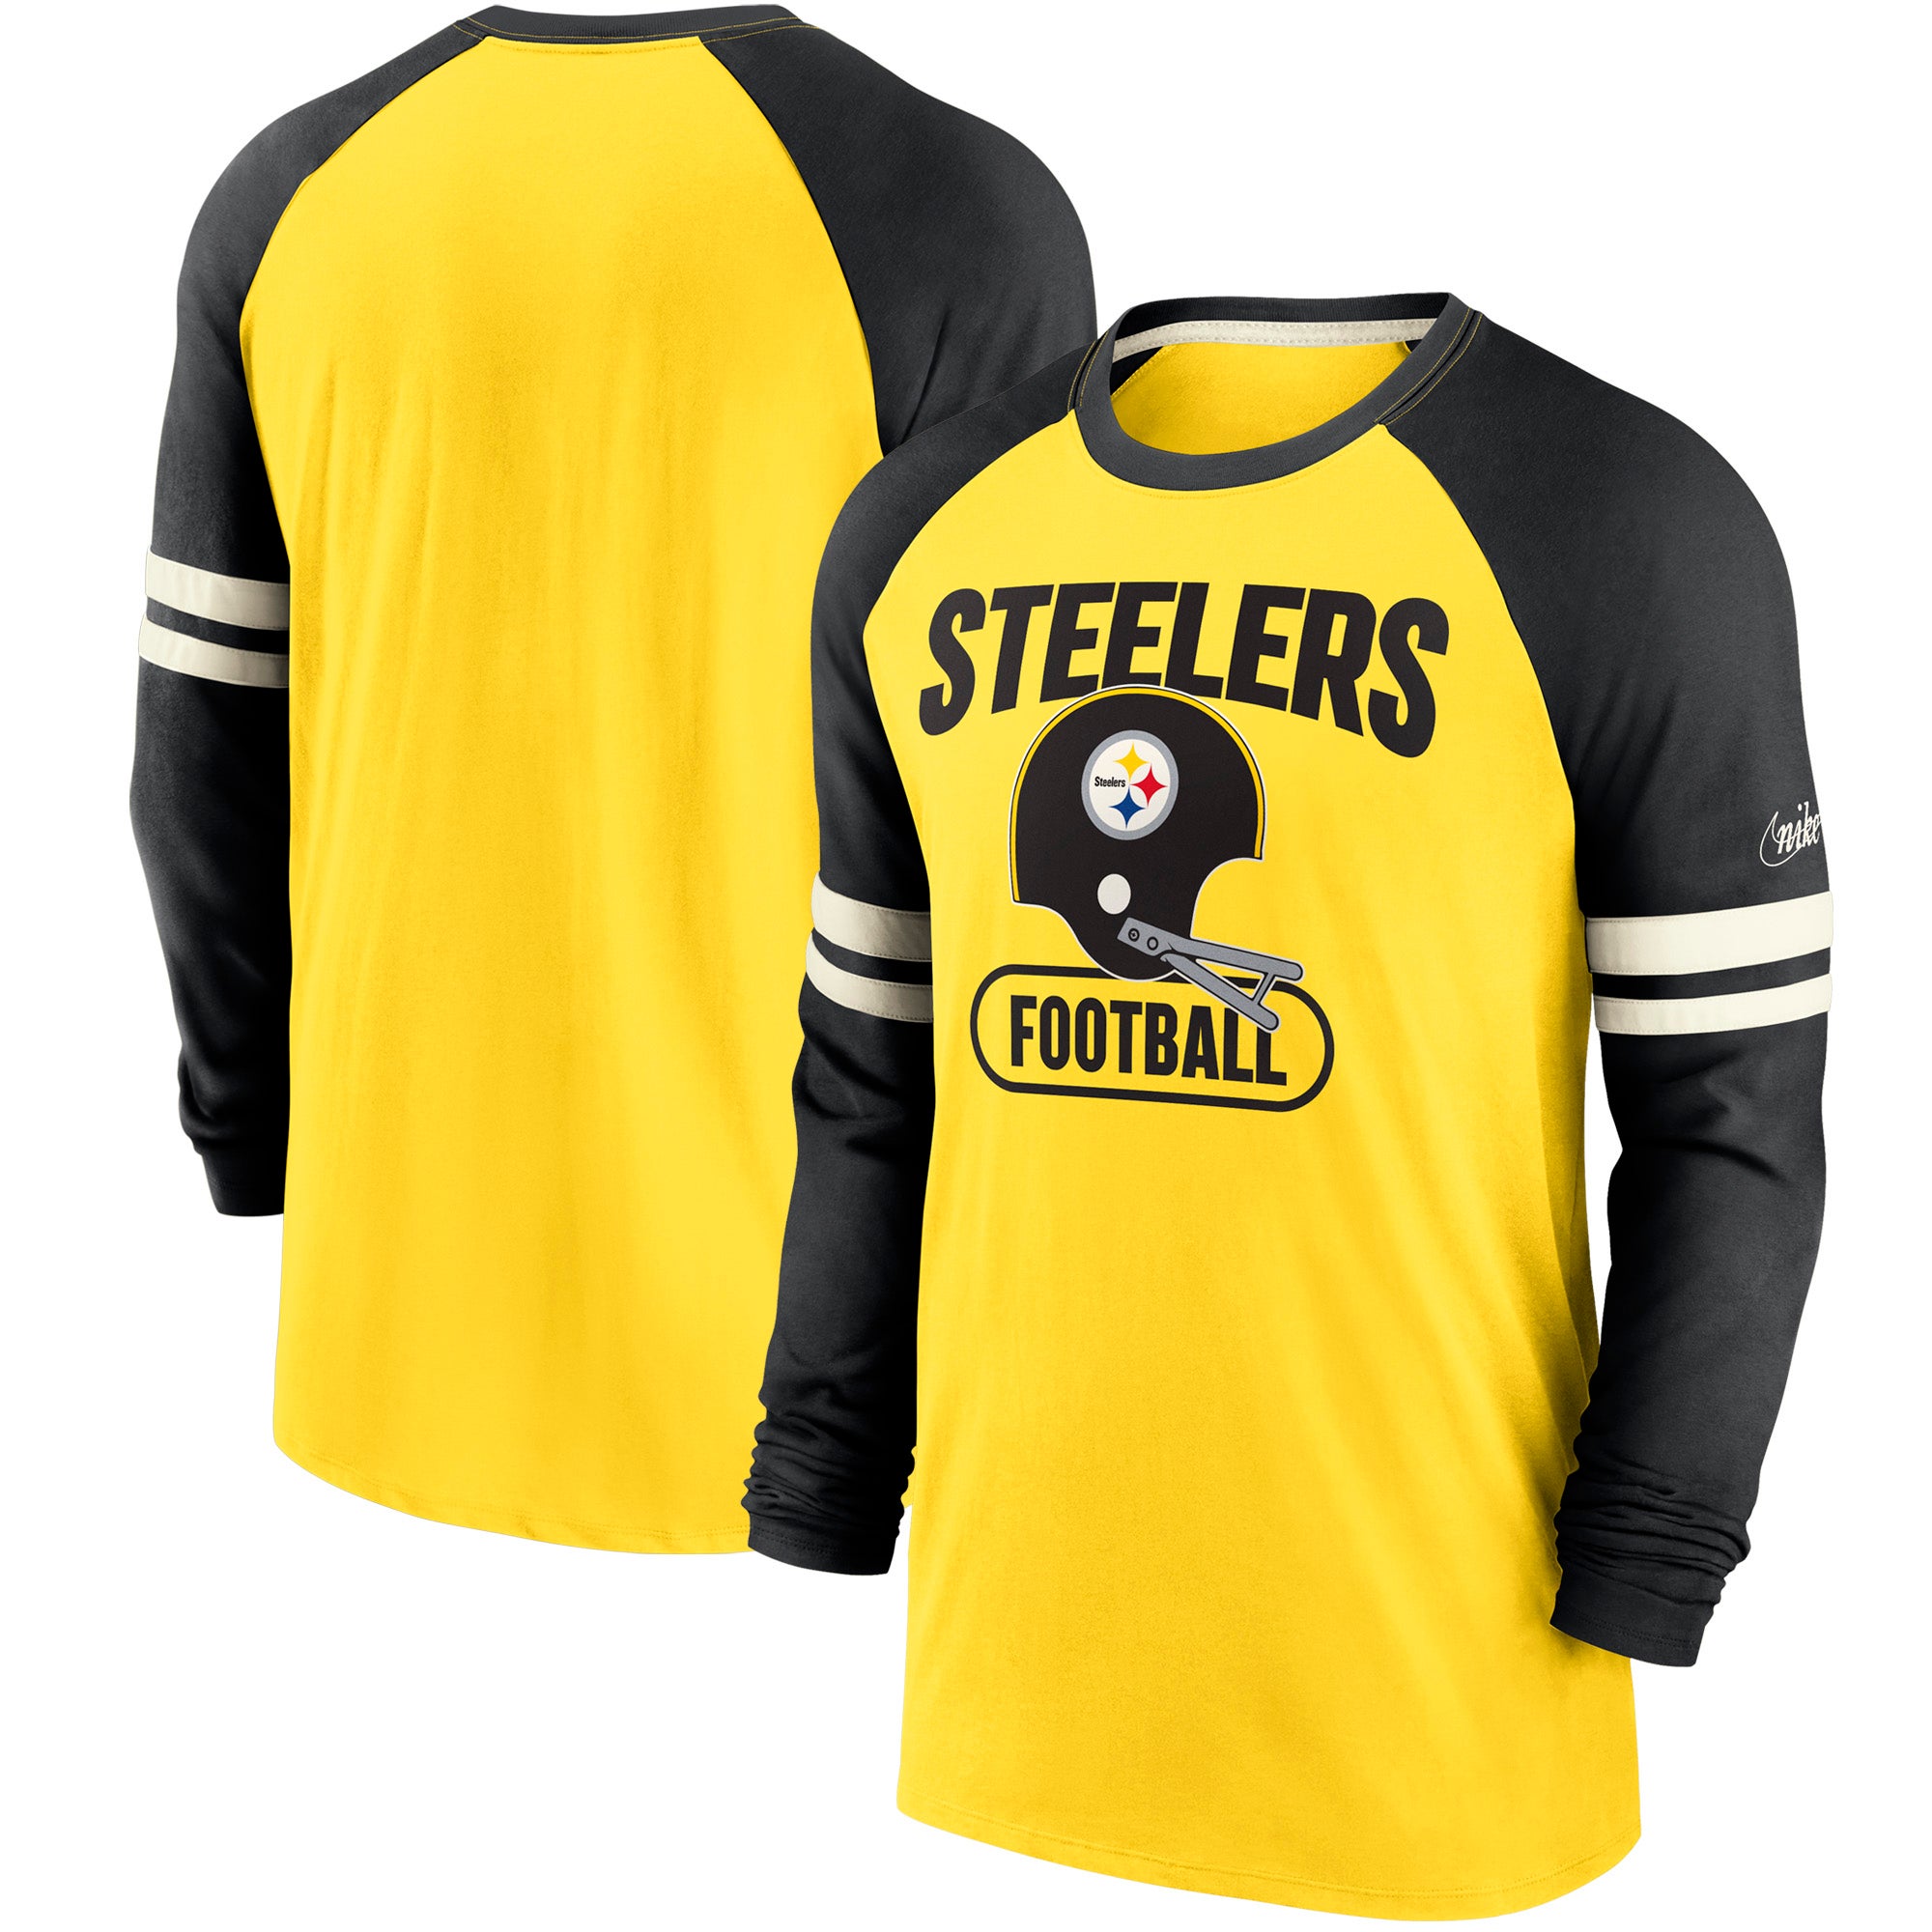 Nike Steelers Throwback Raglan Long Sleeve T-Shirt